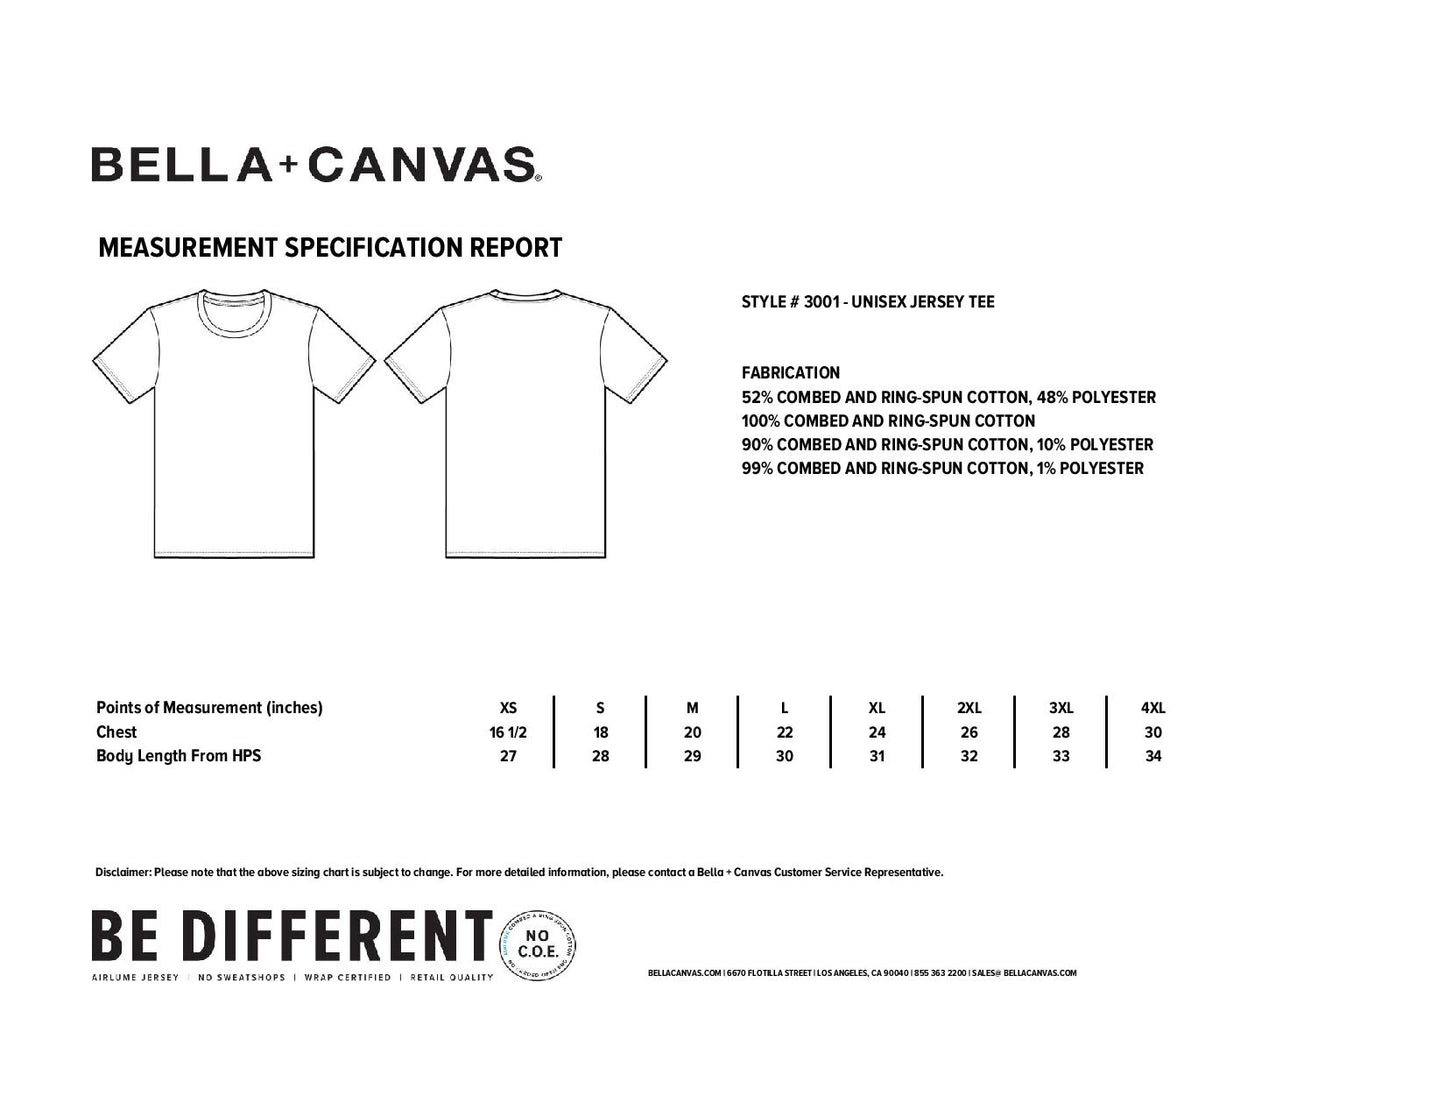 T-Shirt Bella+Canva Wonderful Beautiful Amazing Jersey Short Sleeve Tee Gift for Her Womens